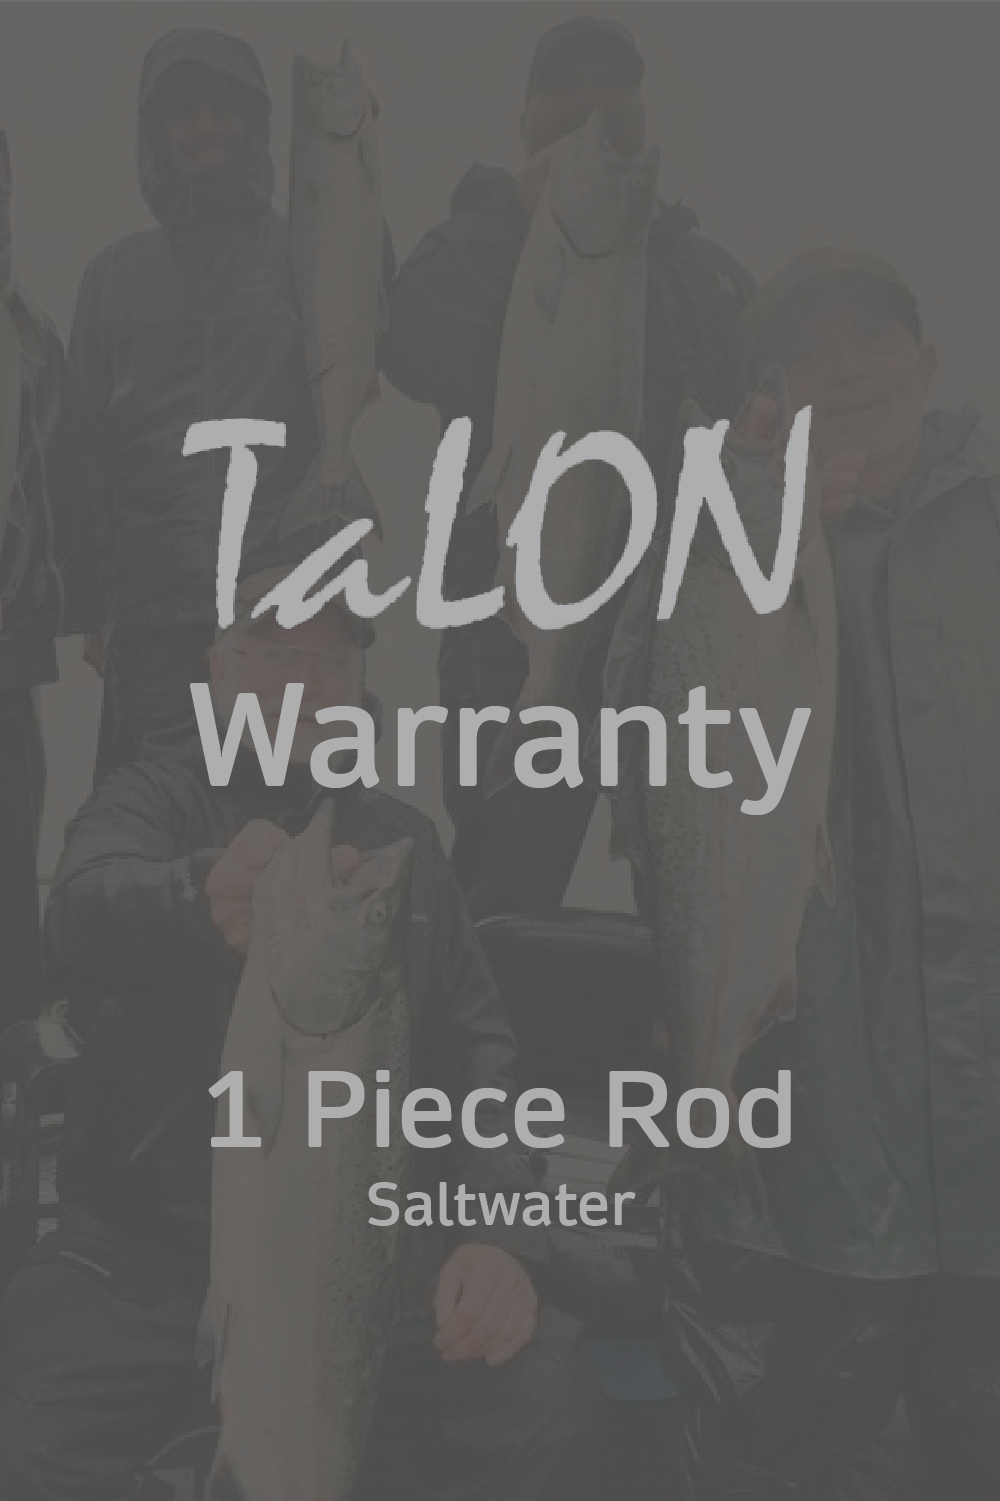 Warranty - 1 Piece Rods - Saltwater